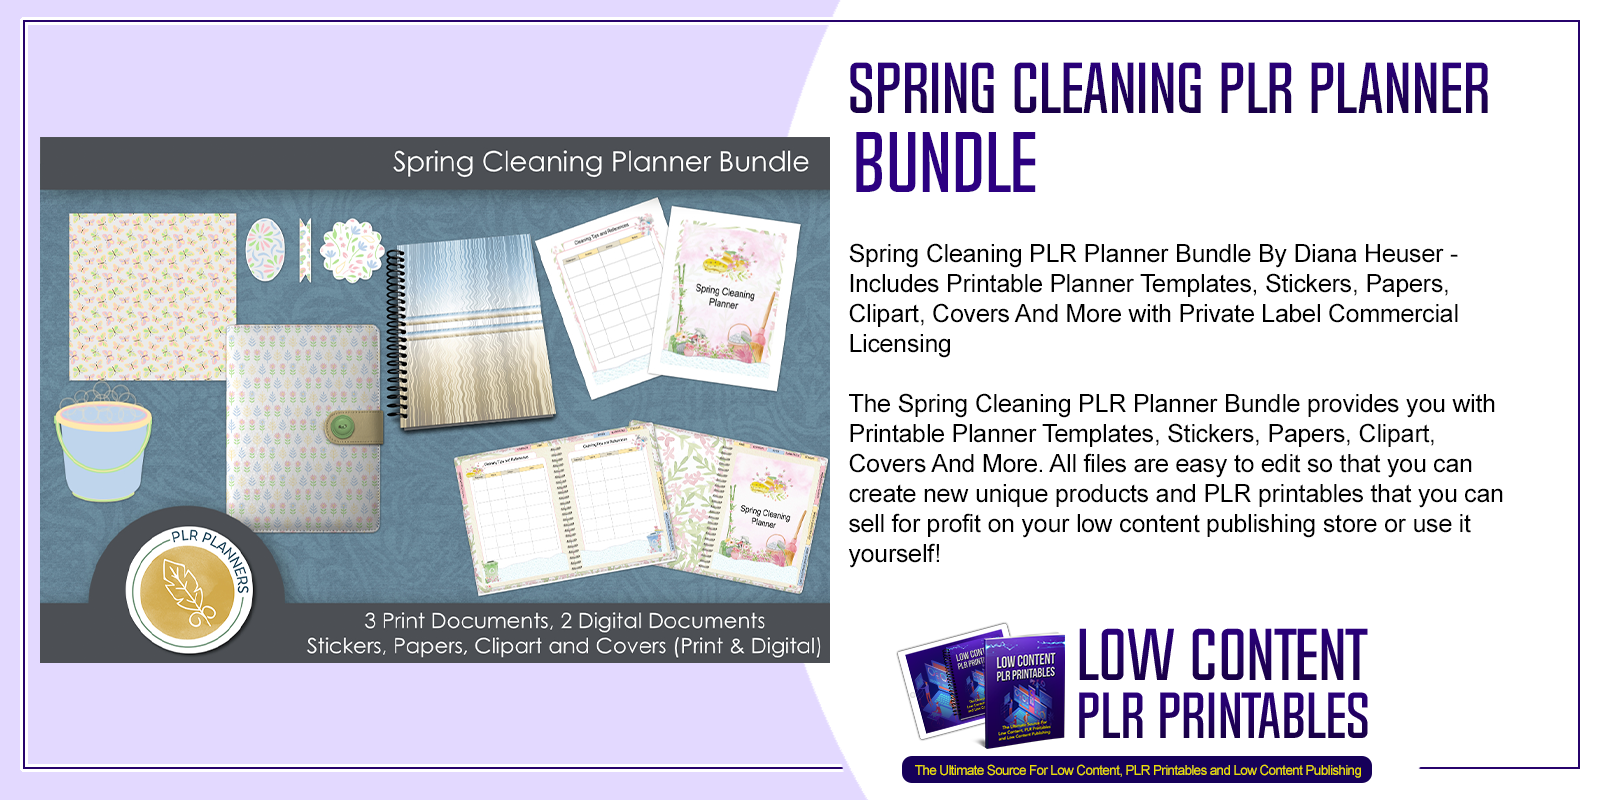 Spring Cleaning PLR Planner Bundle